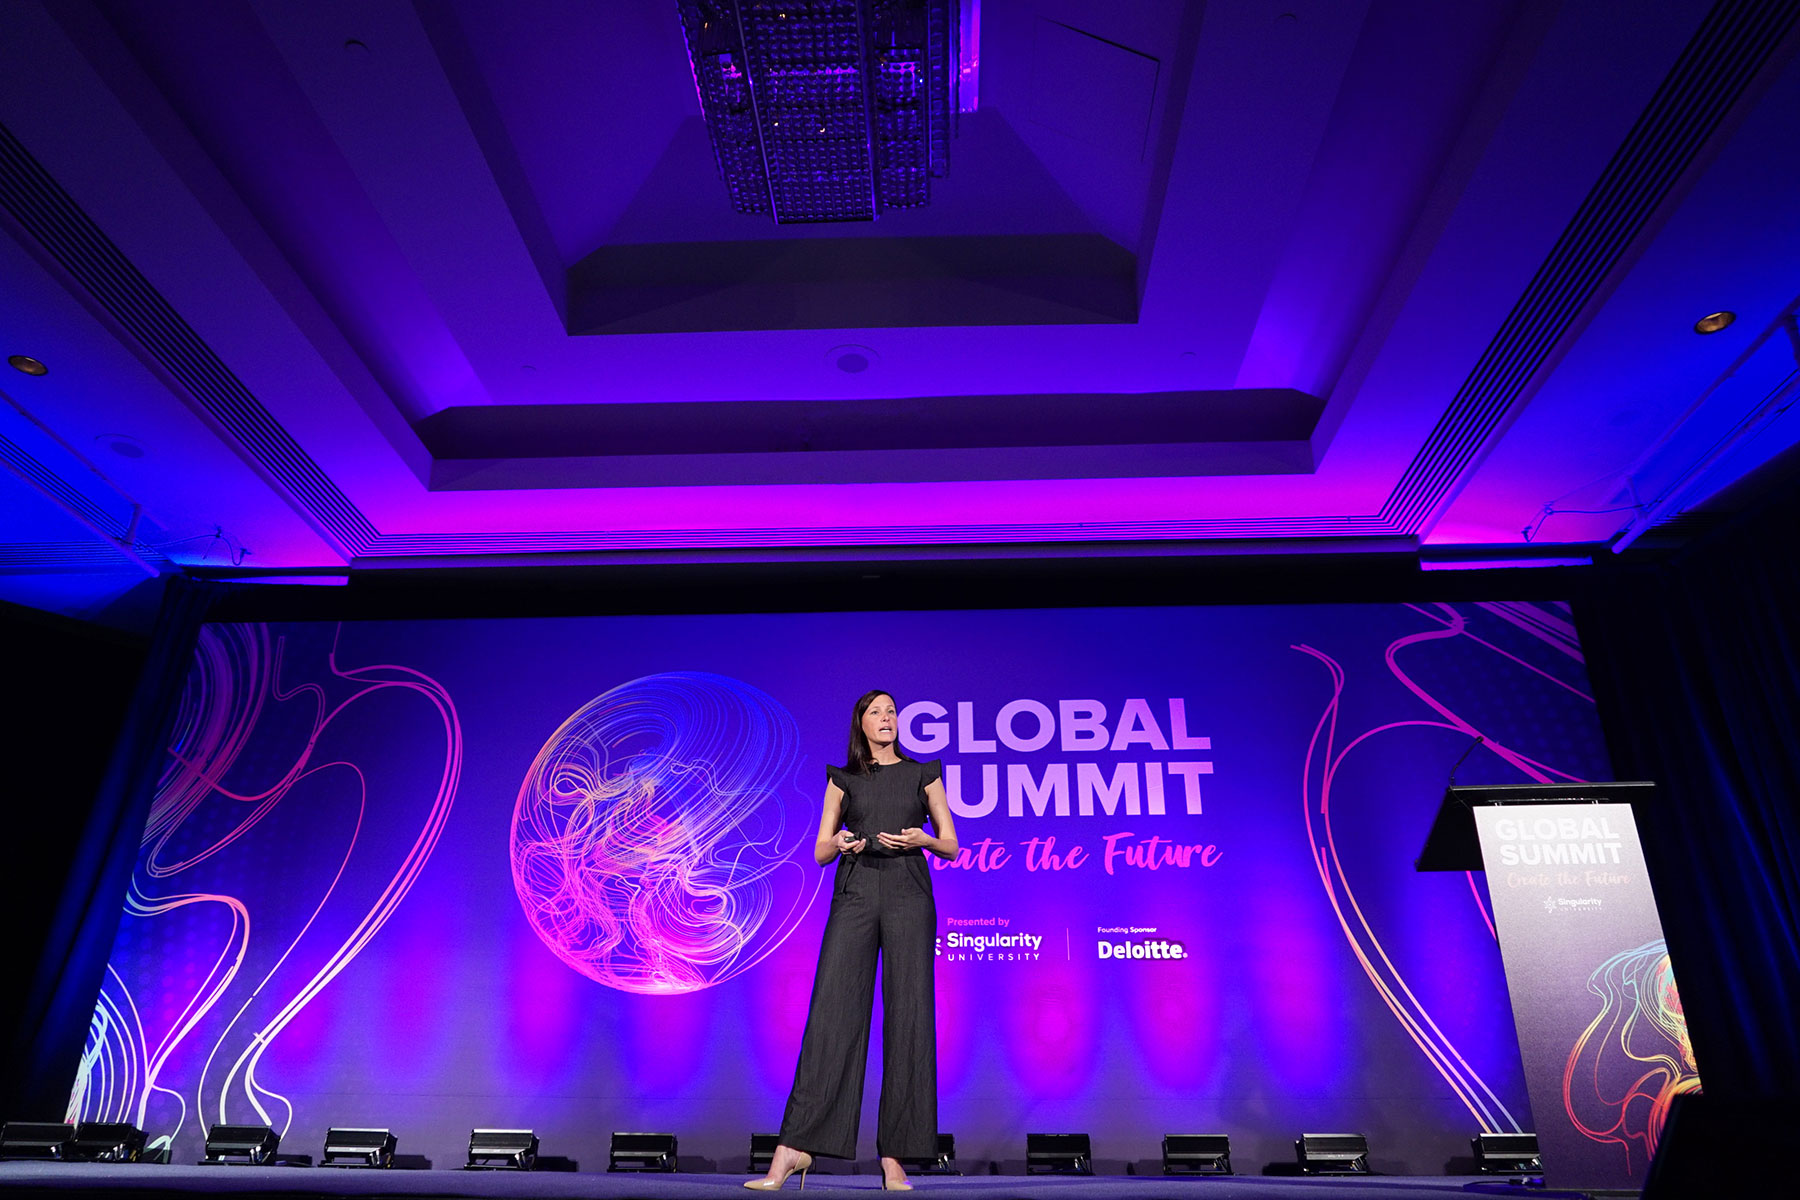 Singularity University's Global Summit 2019